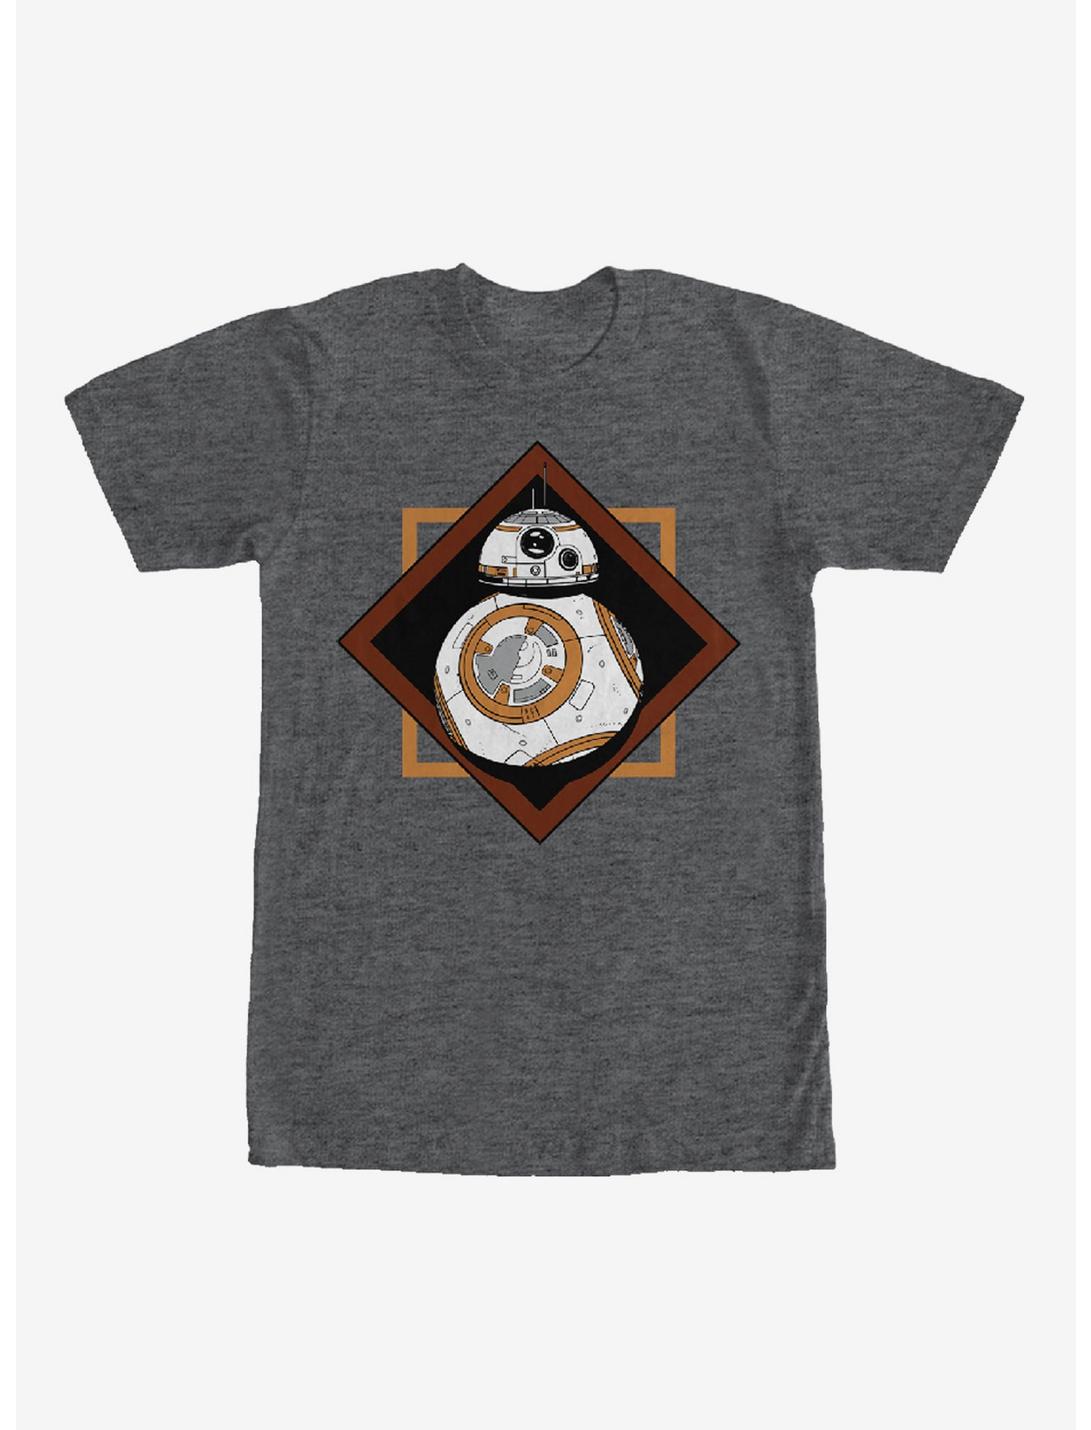 Star Wars BB-8 Square T-Shirt, CHAR HTR, hi-res